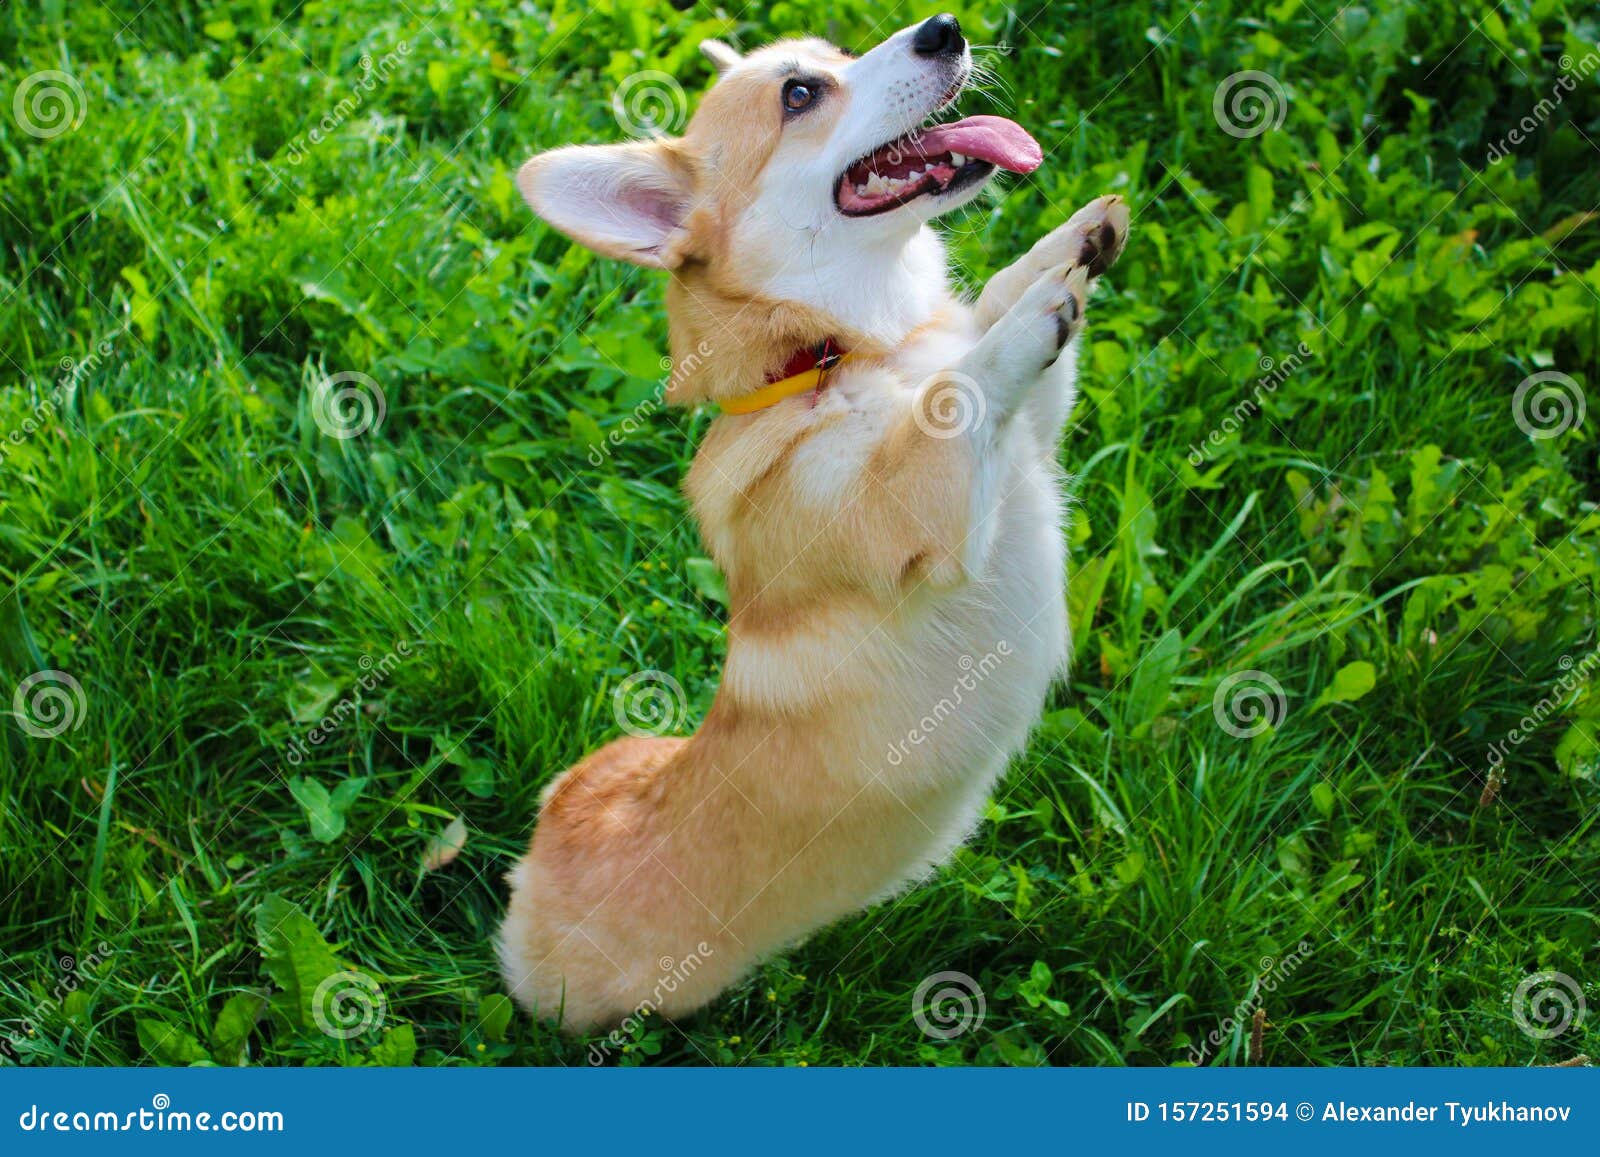 photo of an emotional dog. cheerful and happy dog breed welsh corgi pembroke